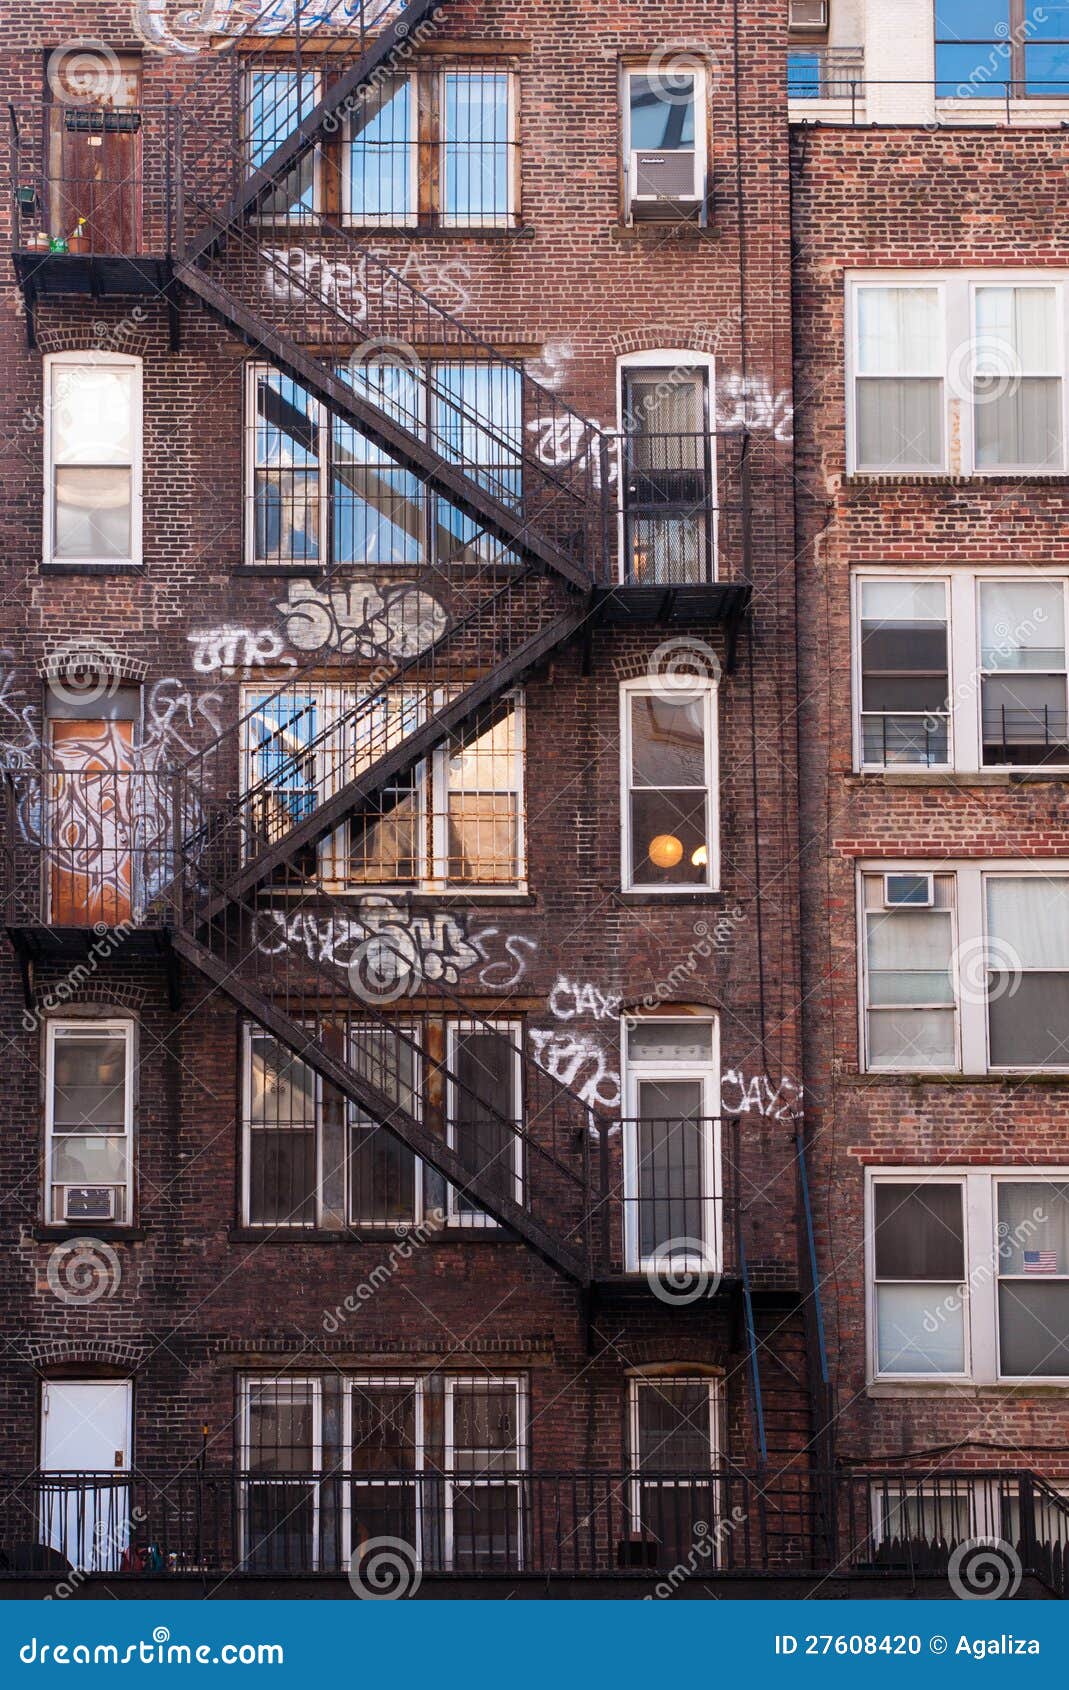 New York City Brick Apartment Building Stock Photo - Image: 27608420